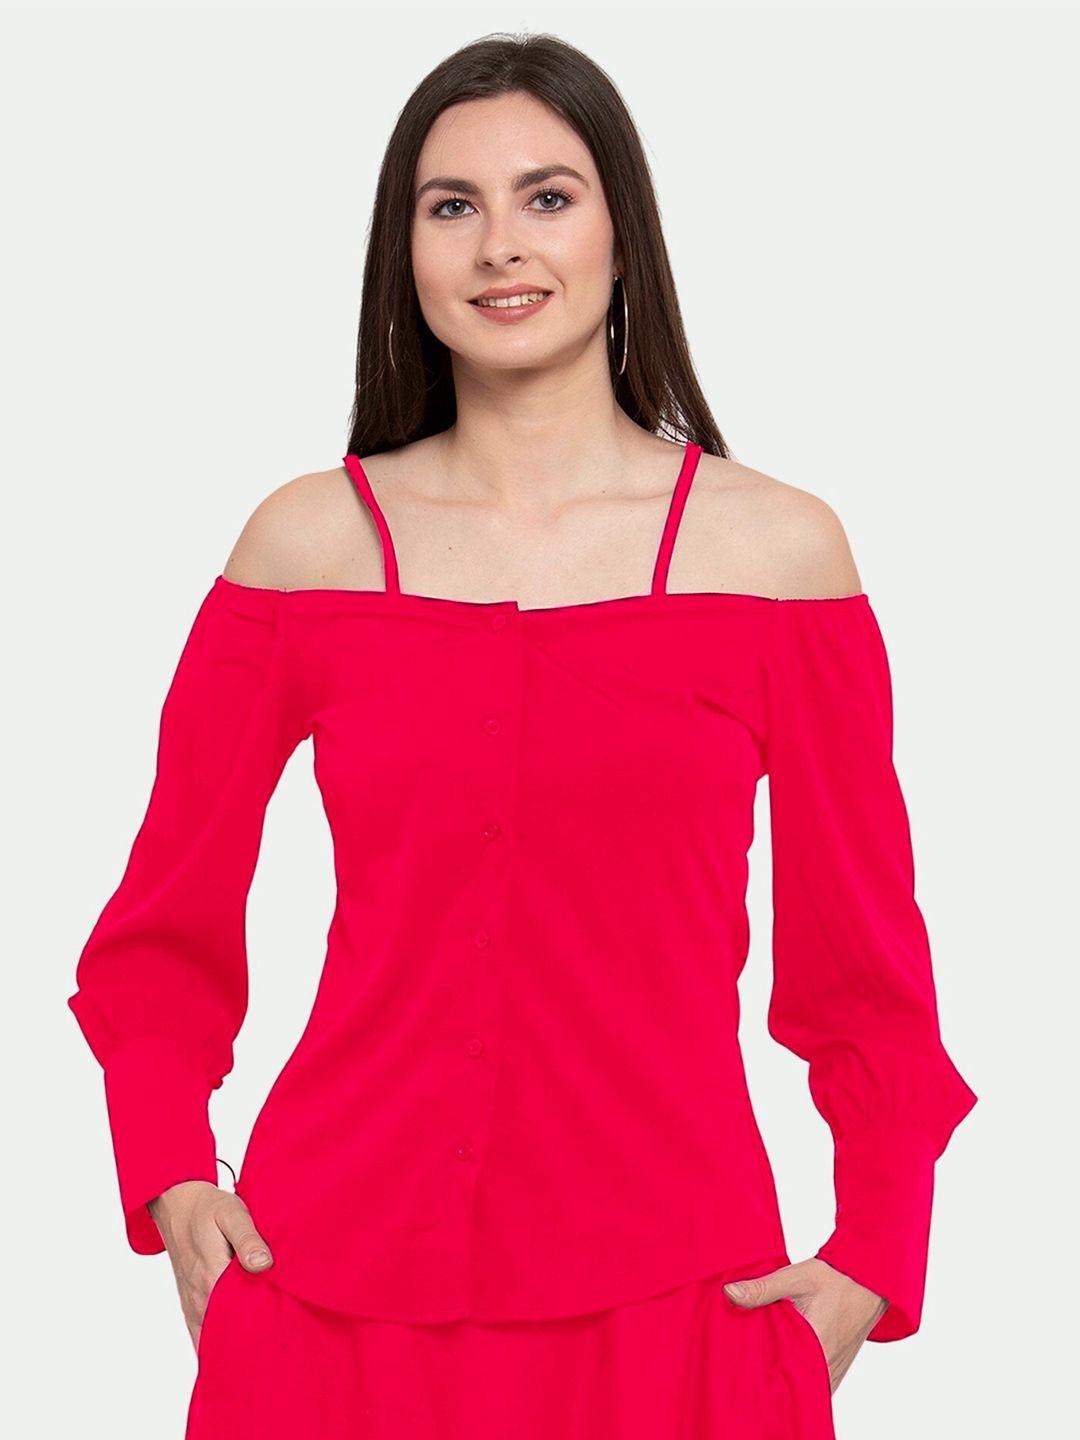 patrorna women pink off-shoulder shirt style top